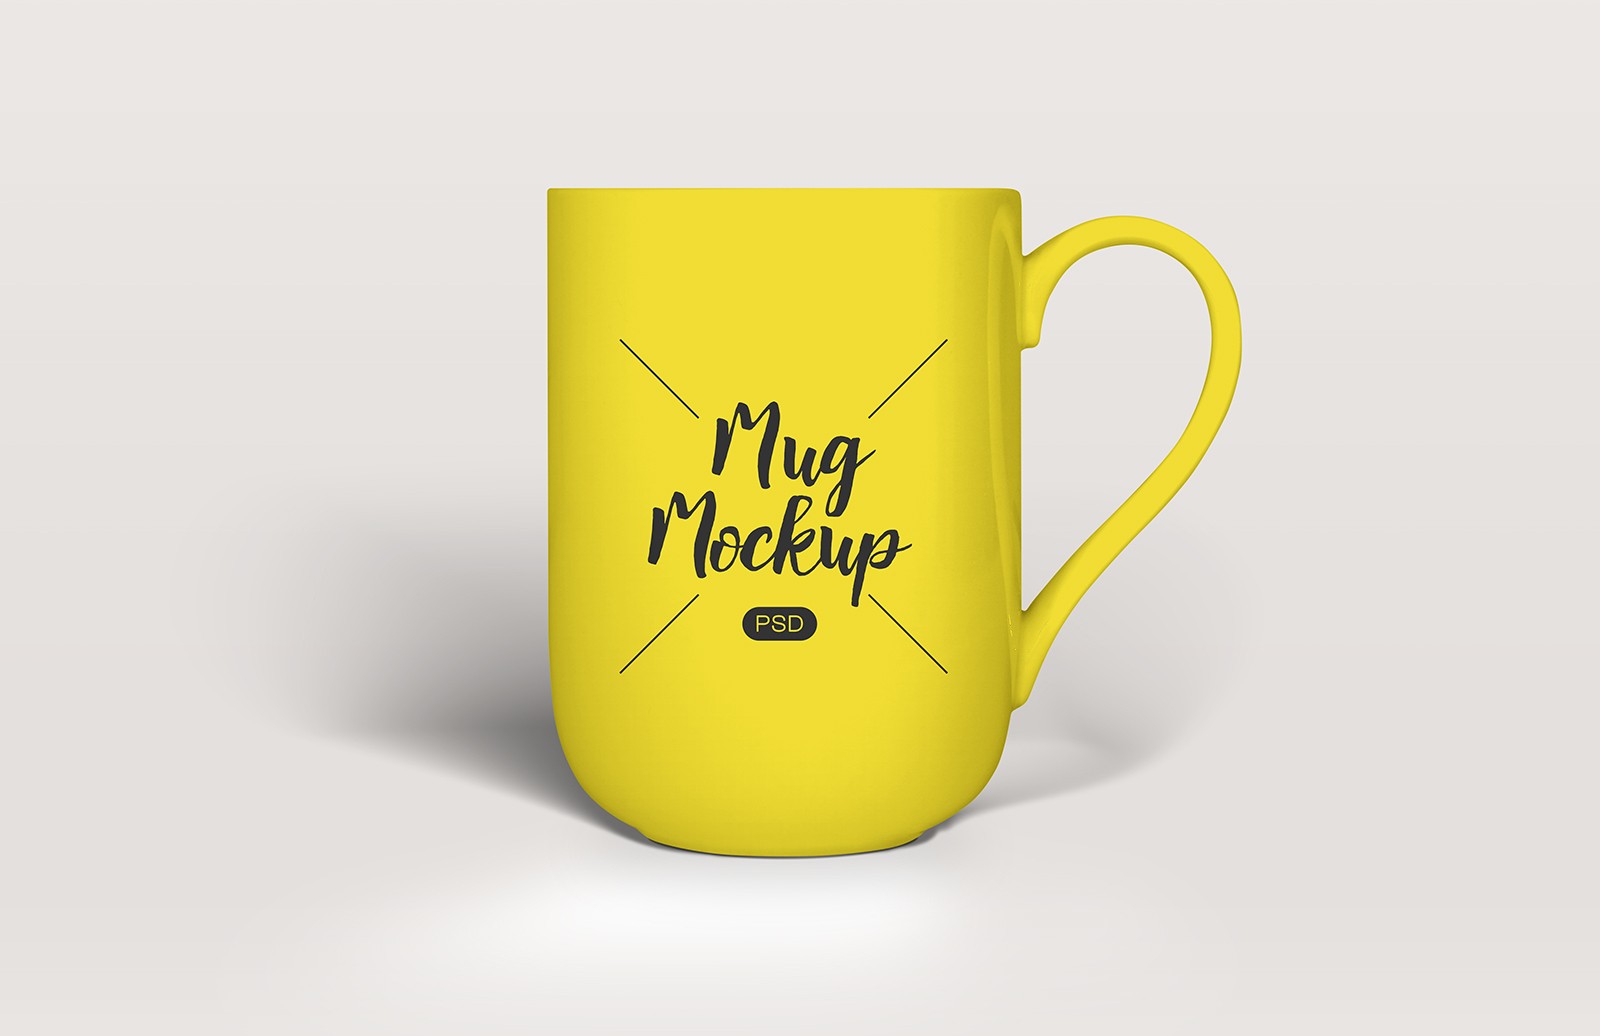 咖啡杯陶瓷杯样机 Coffee Mug Mockup PSD插图(2)